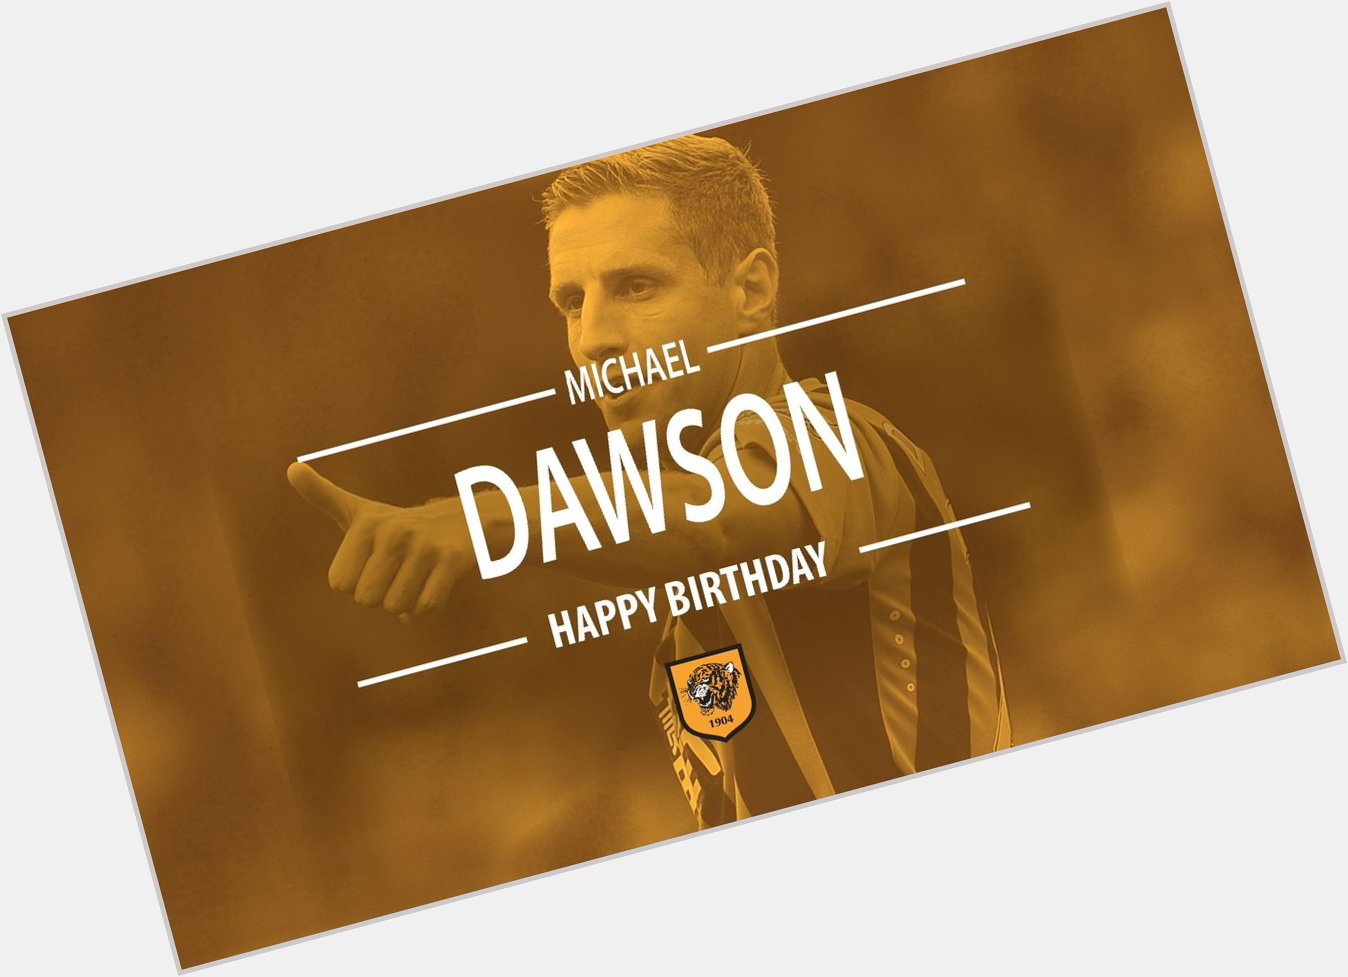 HAPPY BIRTHDAY: Michael Dawson celebrates his 31st birthday today!  